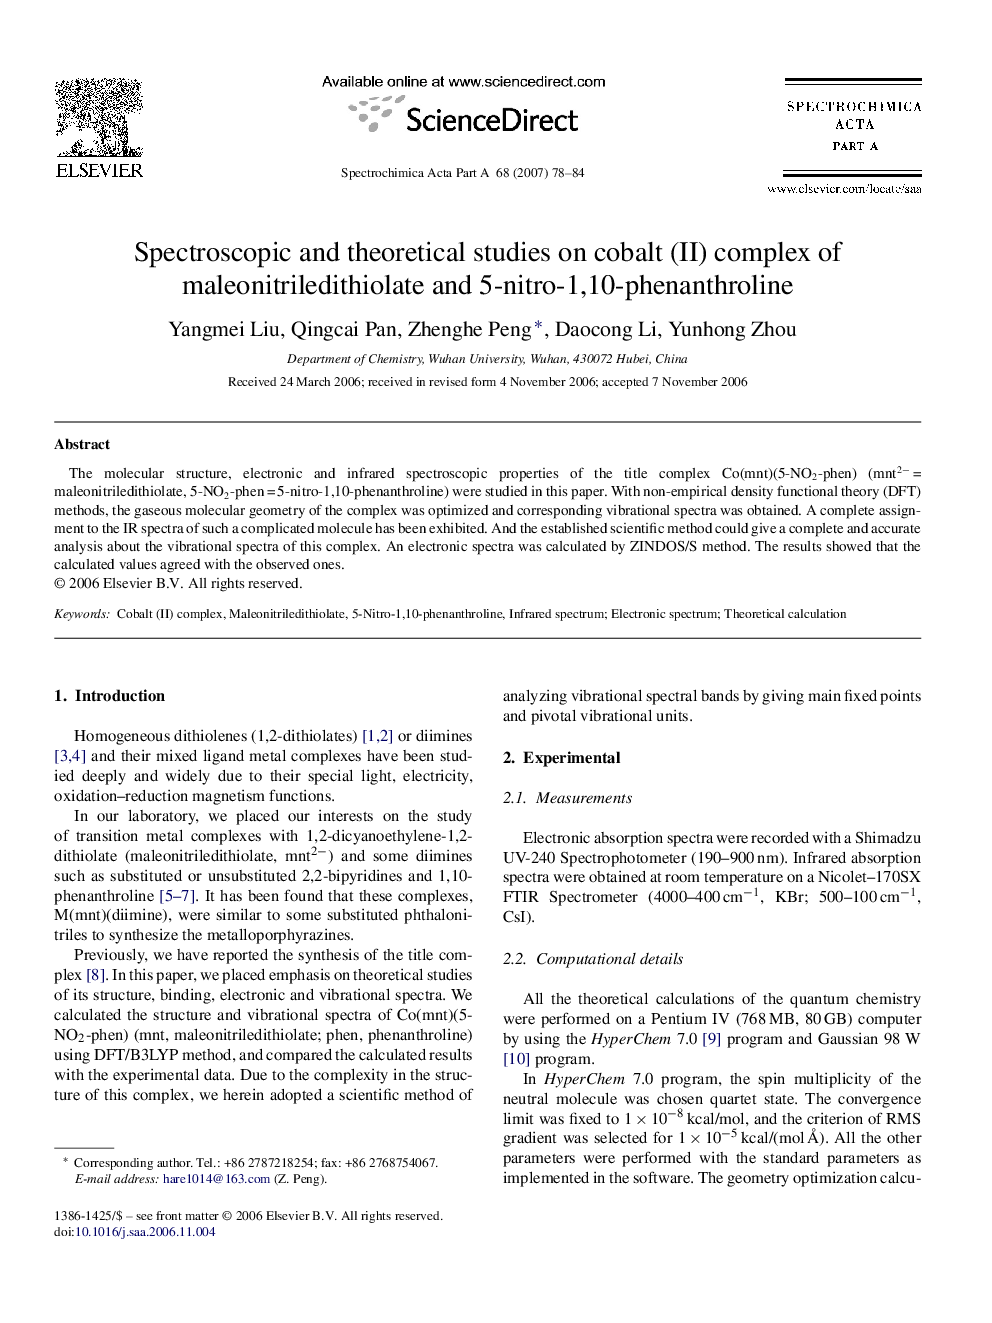 Spectroscopic and theoretical studies on cobalt (II) complex of maleonitriledithiolate and 5-nitro-1,10-phenanthroline